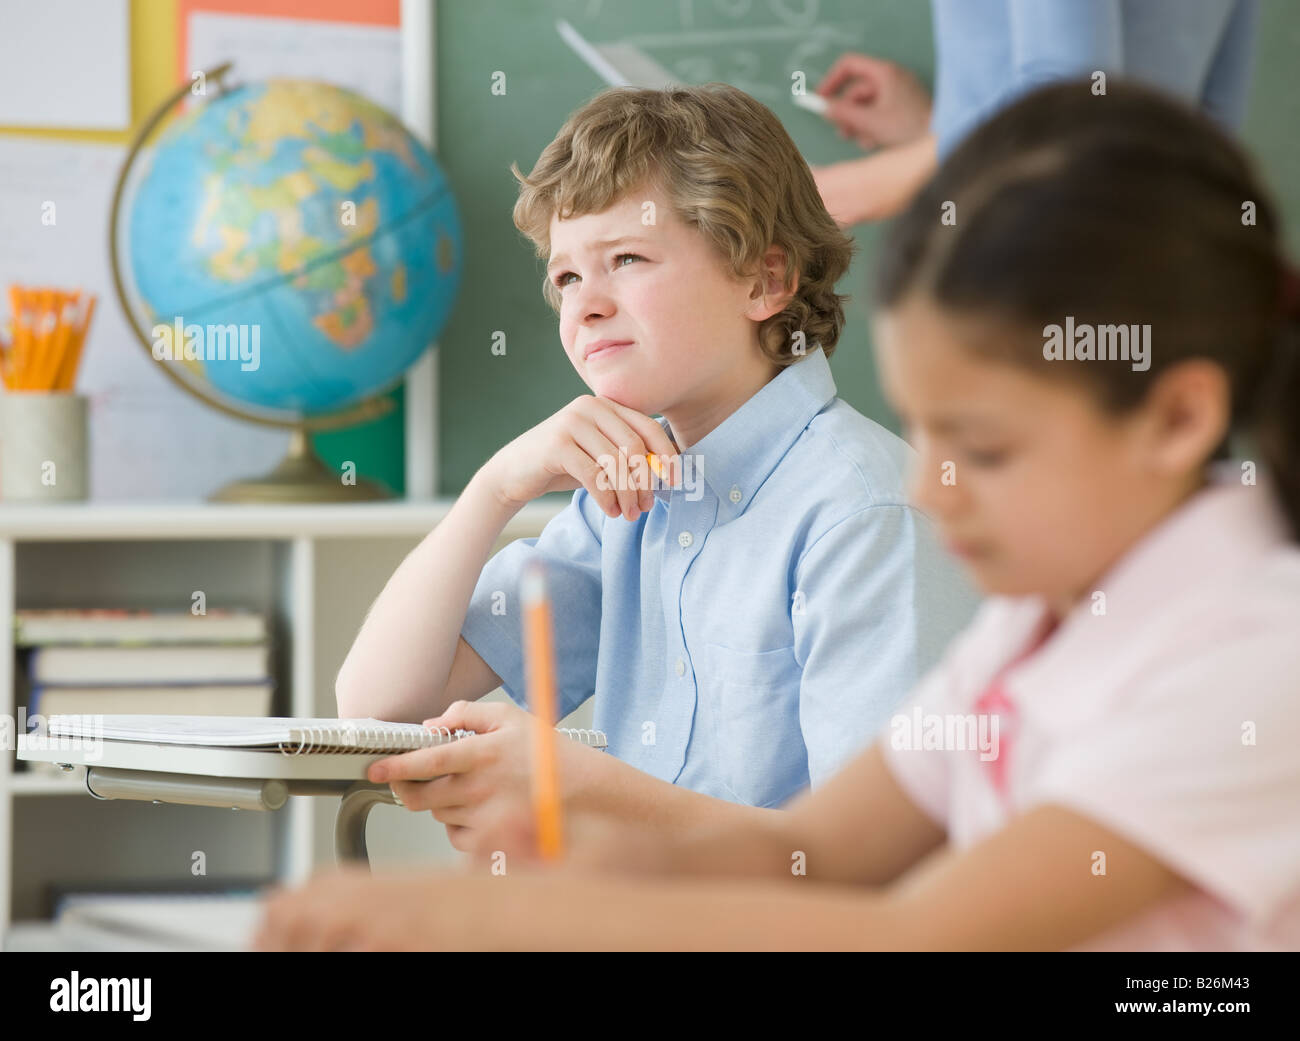 Boy thinking at school desk Stock Photo